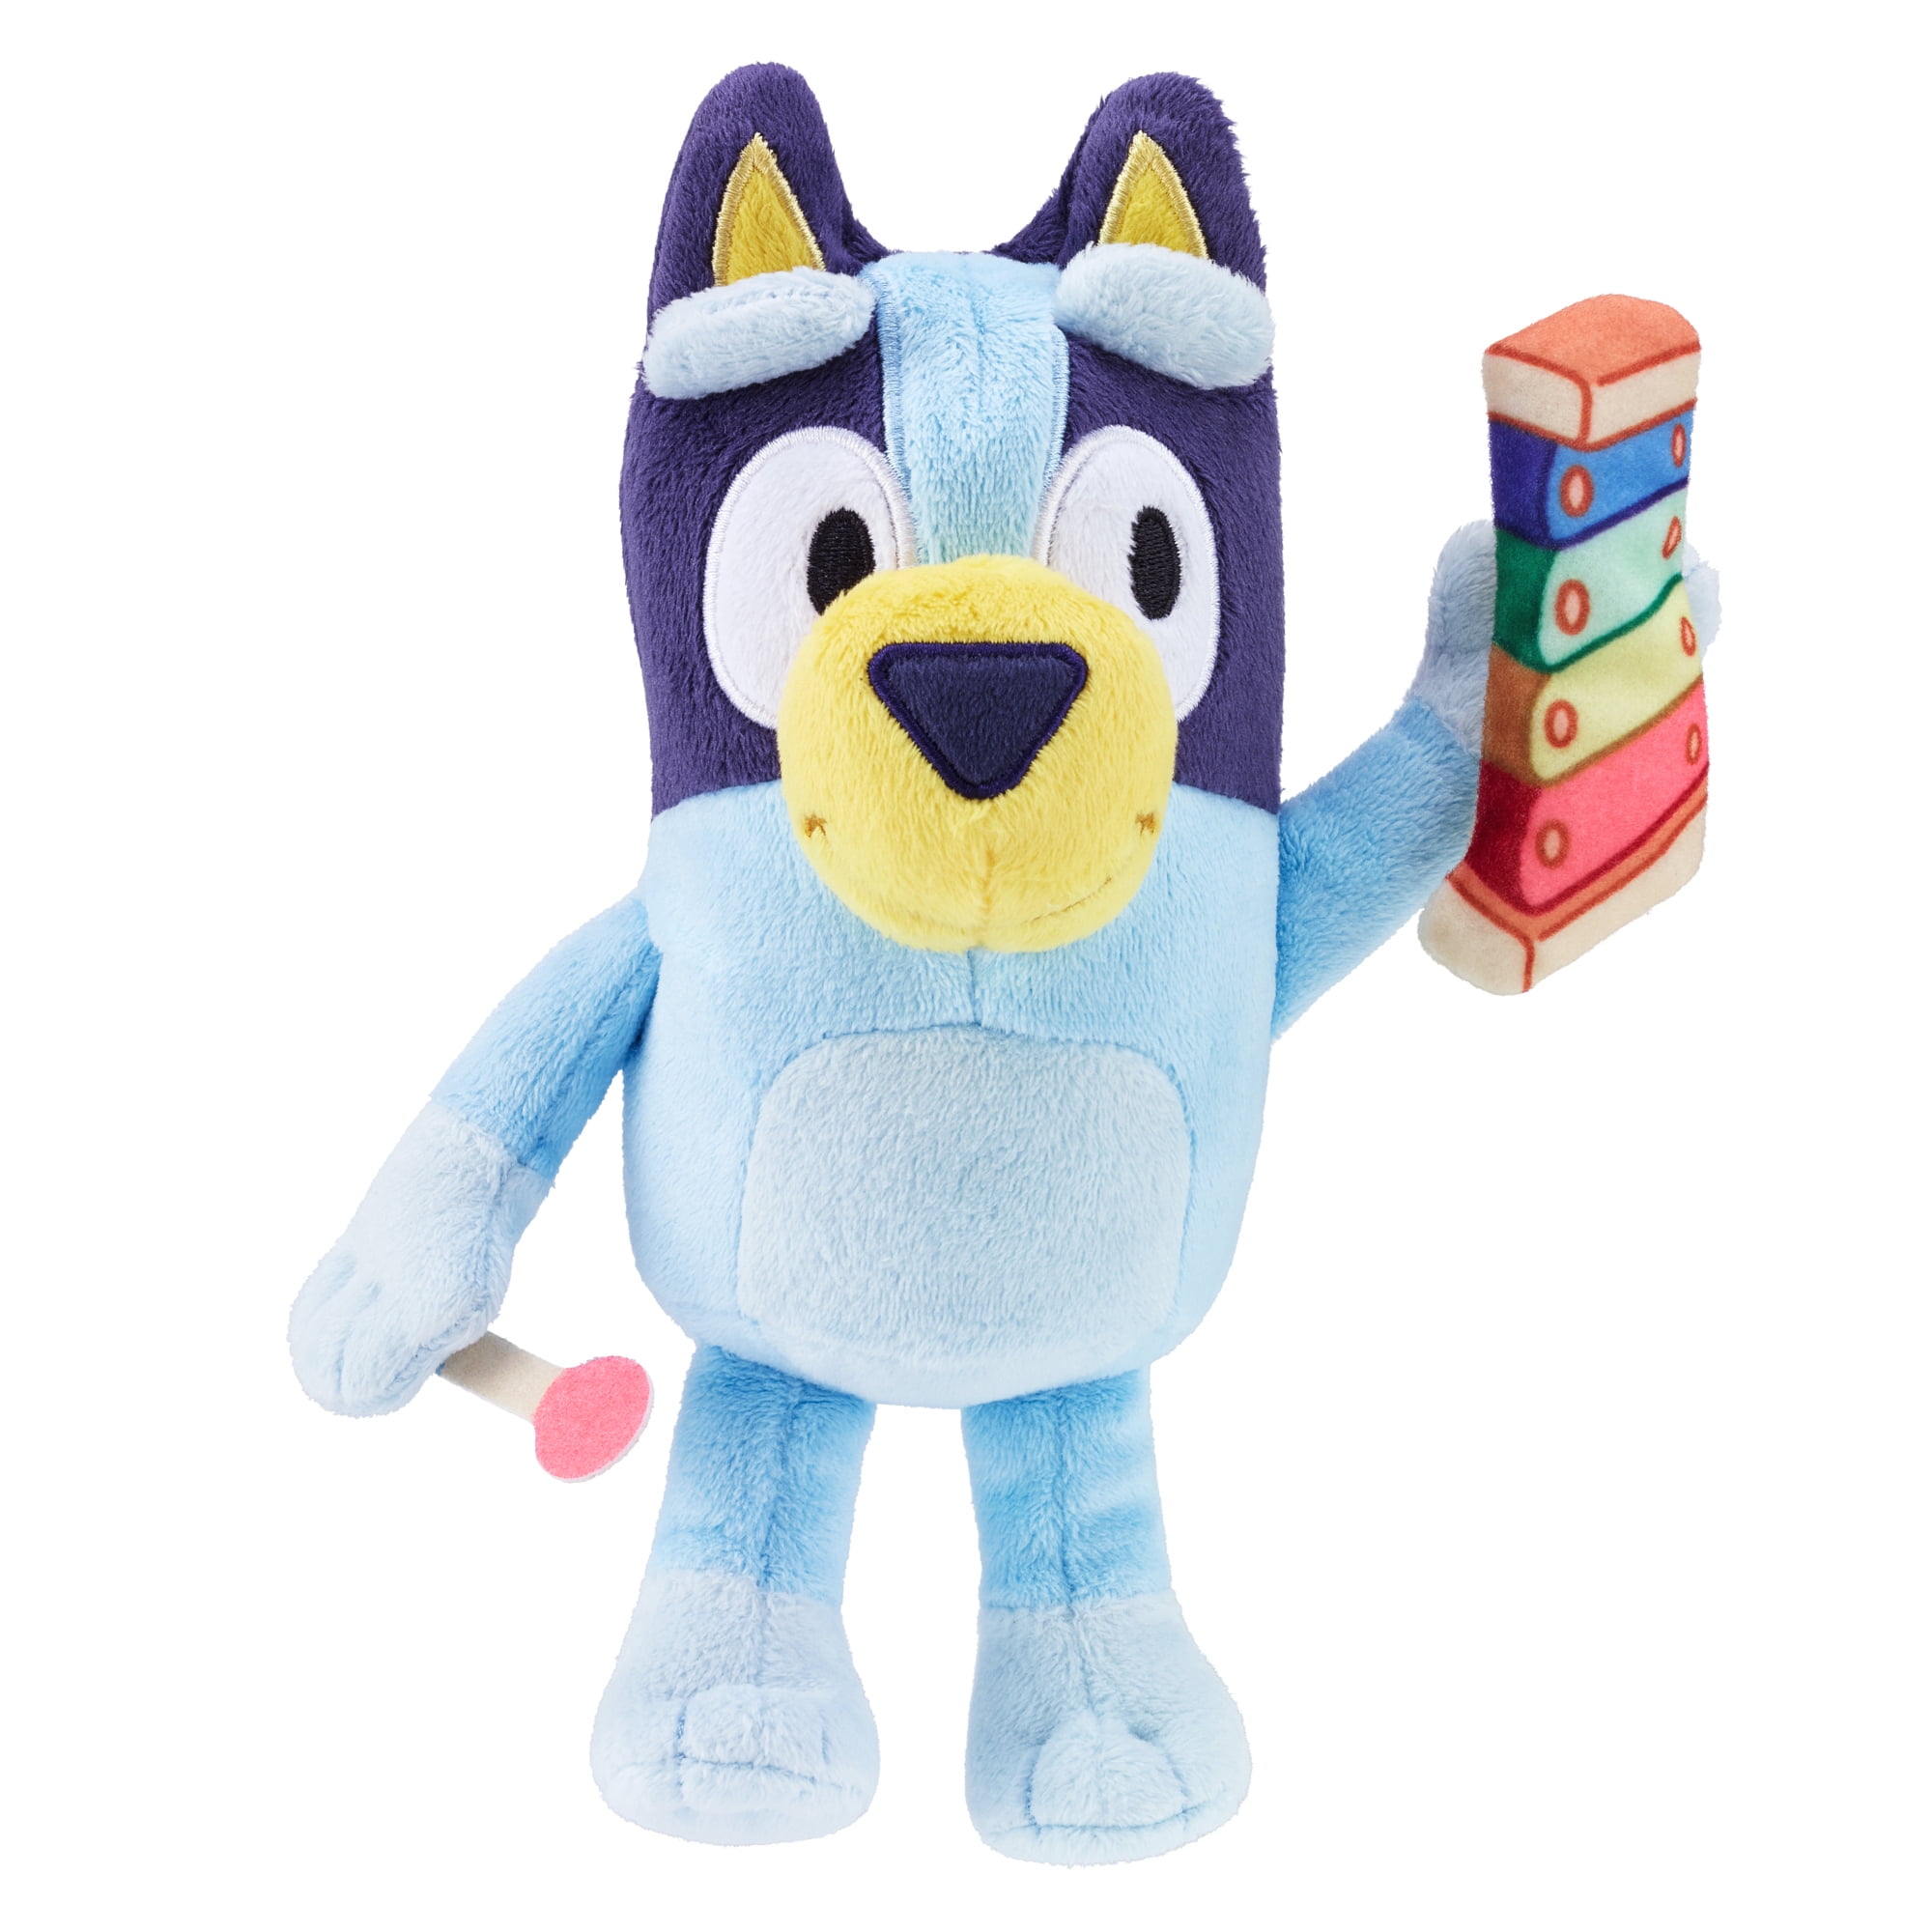 New Arrival Cute Mini 7" Plush Soft Stuffed Animal Husky Dog Baby Kids Toys 2019 